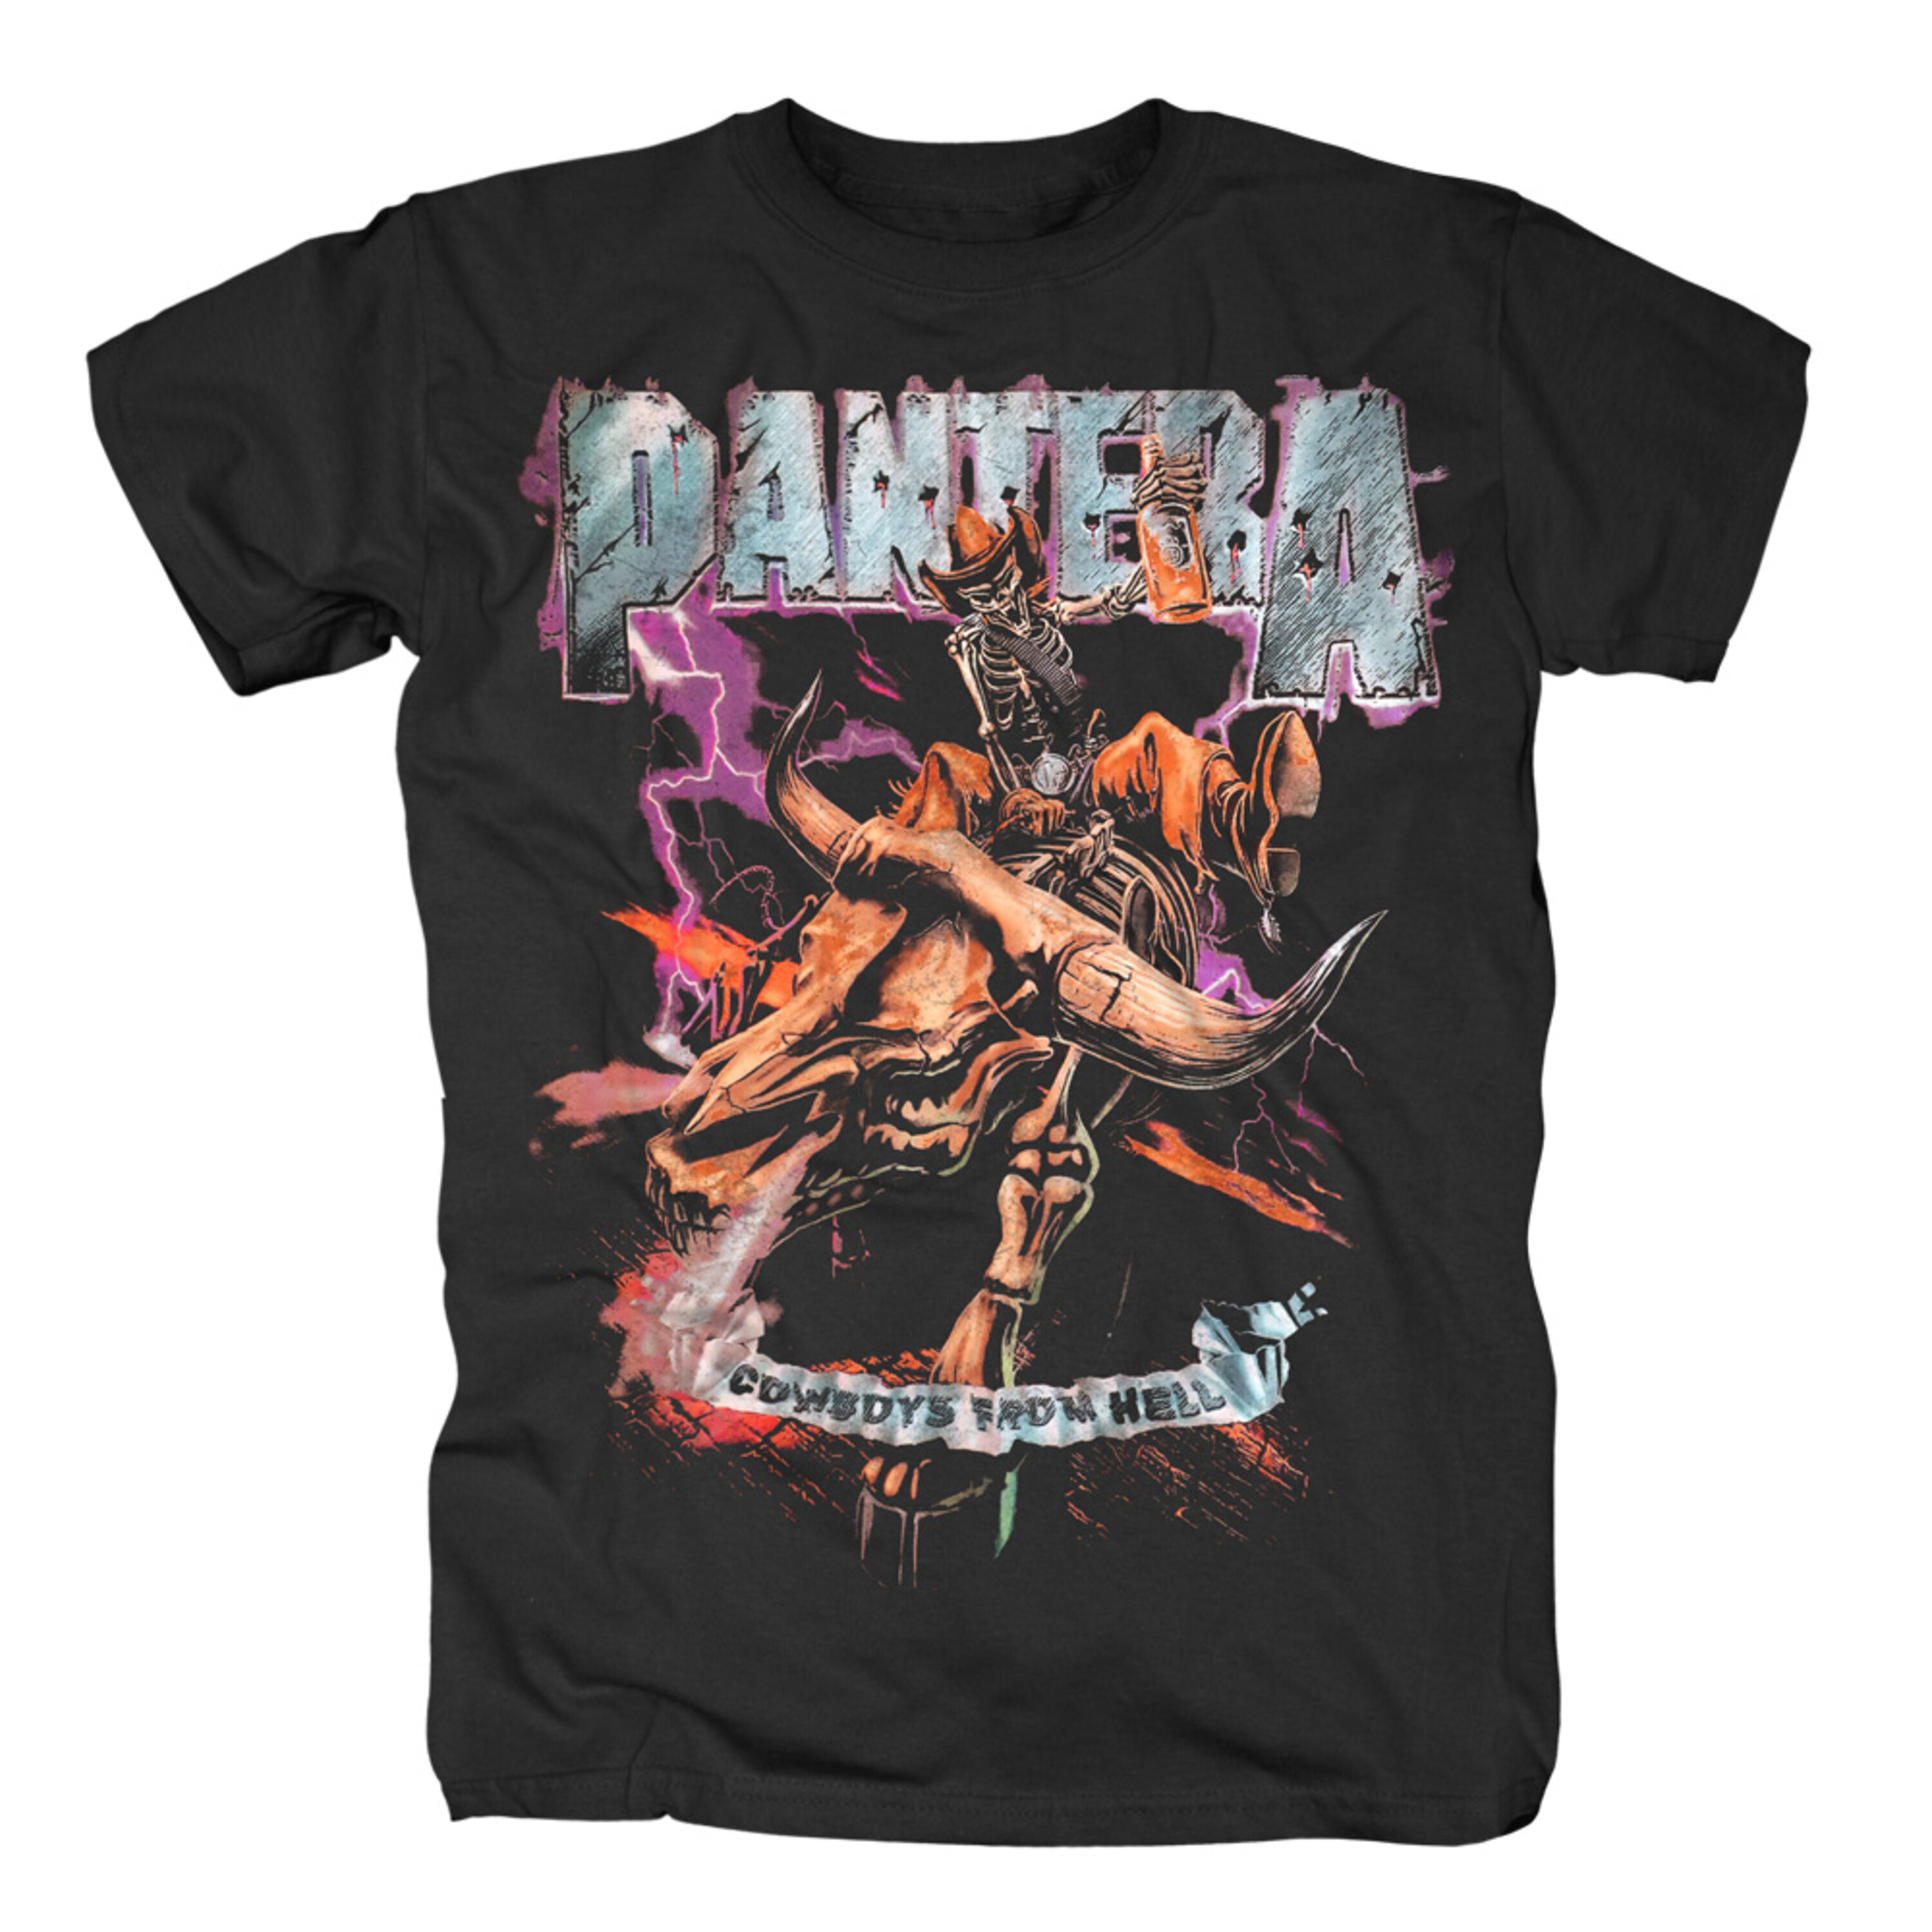 Bravado - Cowboys From Hell Tour 1990 - Pantera - T-Shirt